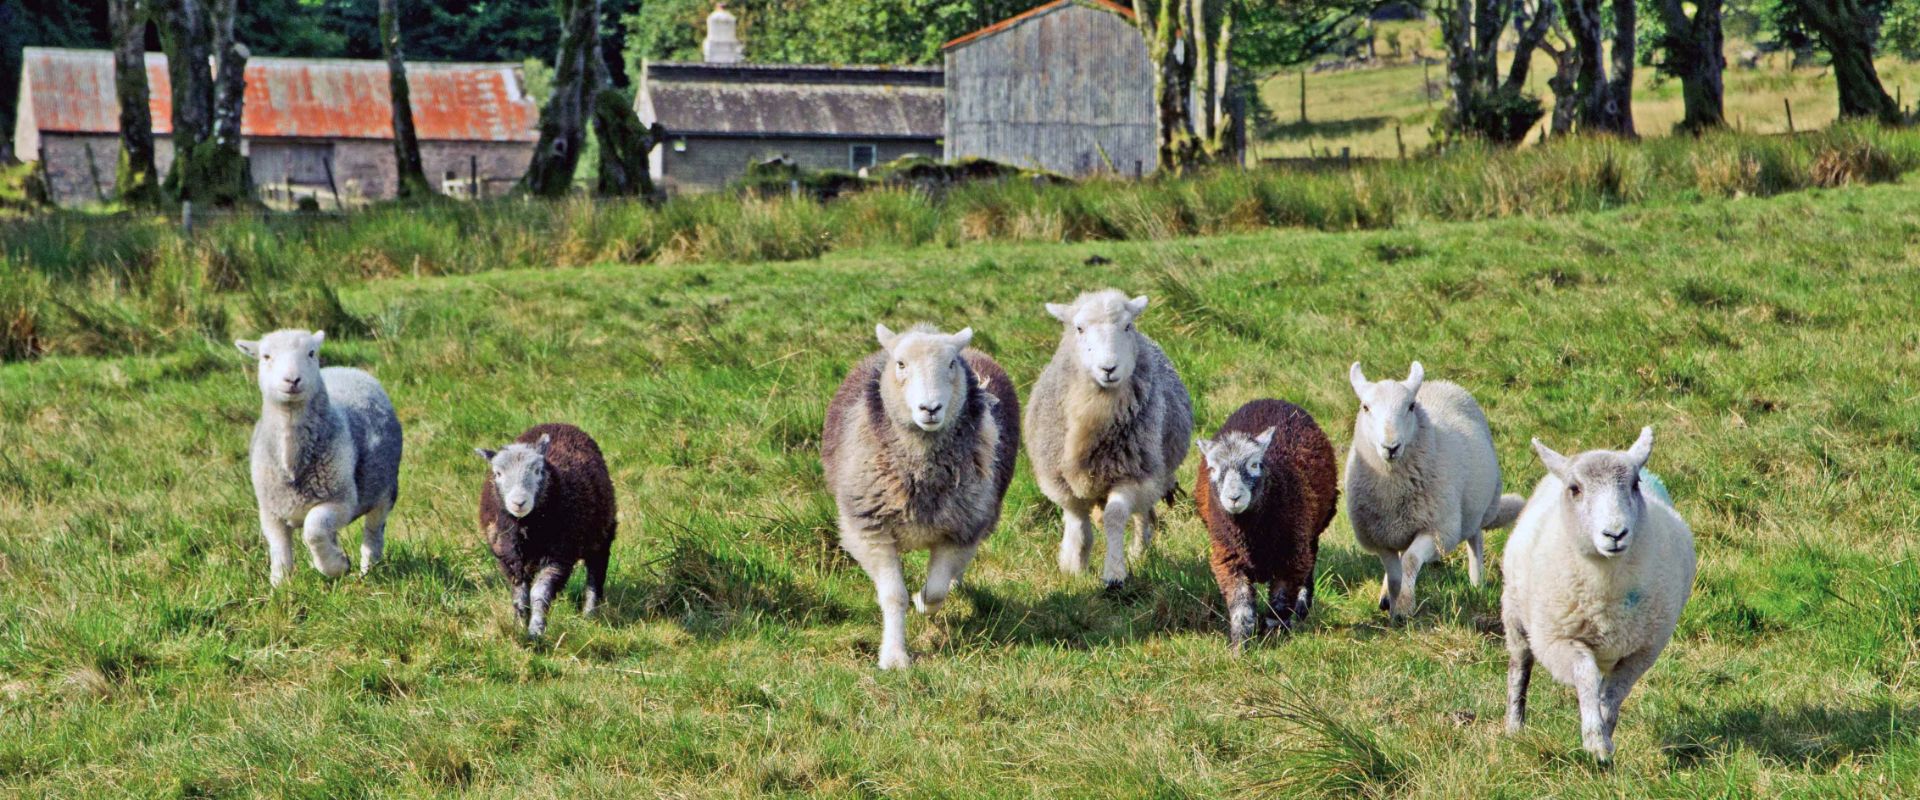 Sheep on Dartmoor during the Sheepdog Experience